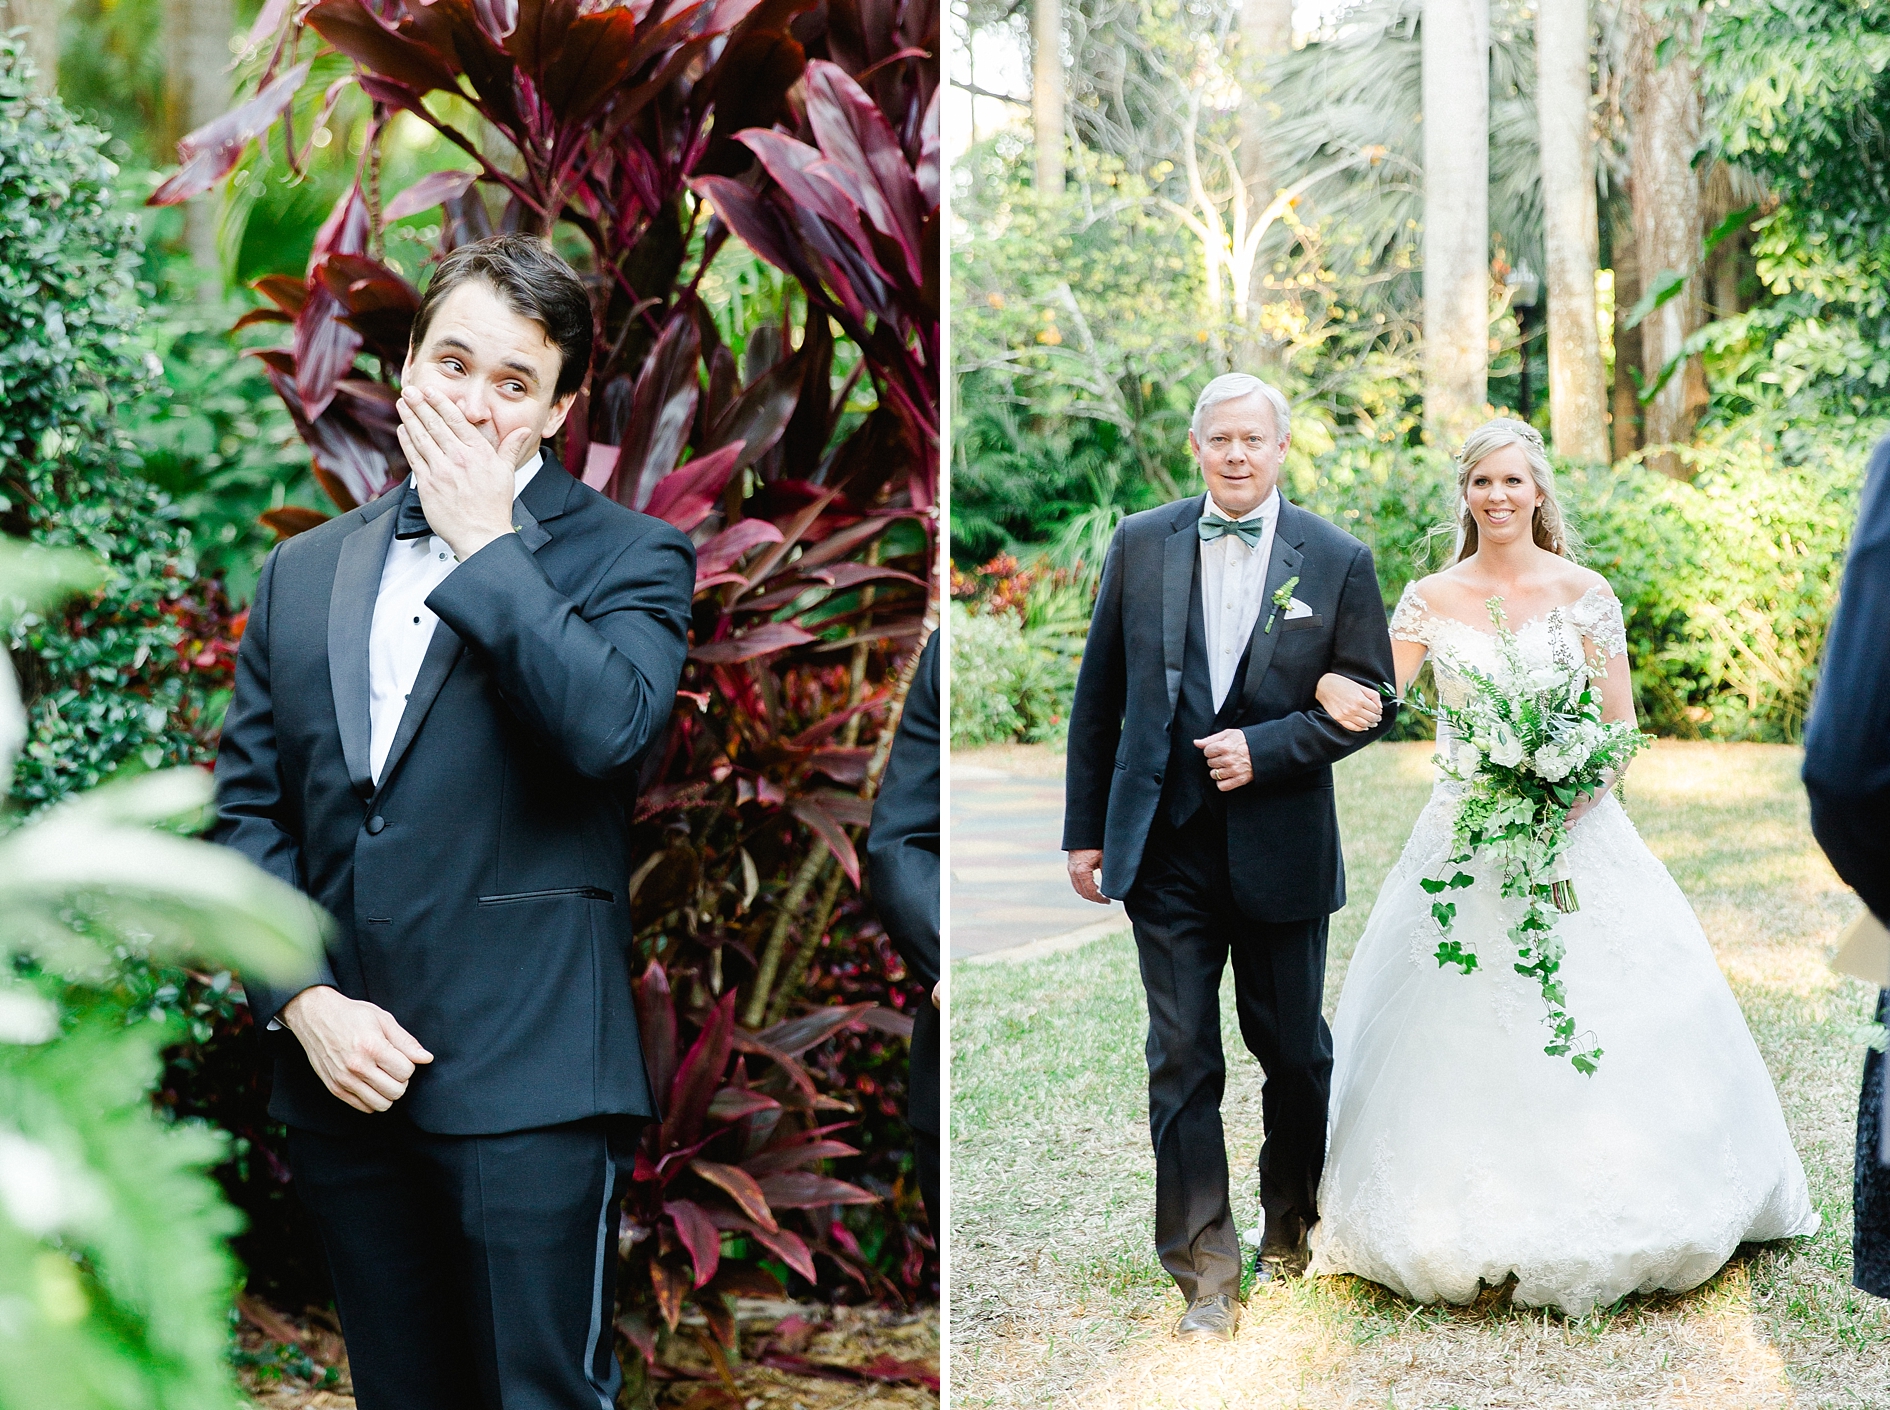 Sunken Gardens Wedding | © Ailyn La Torre Photography 2016